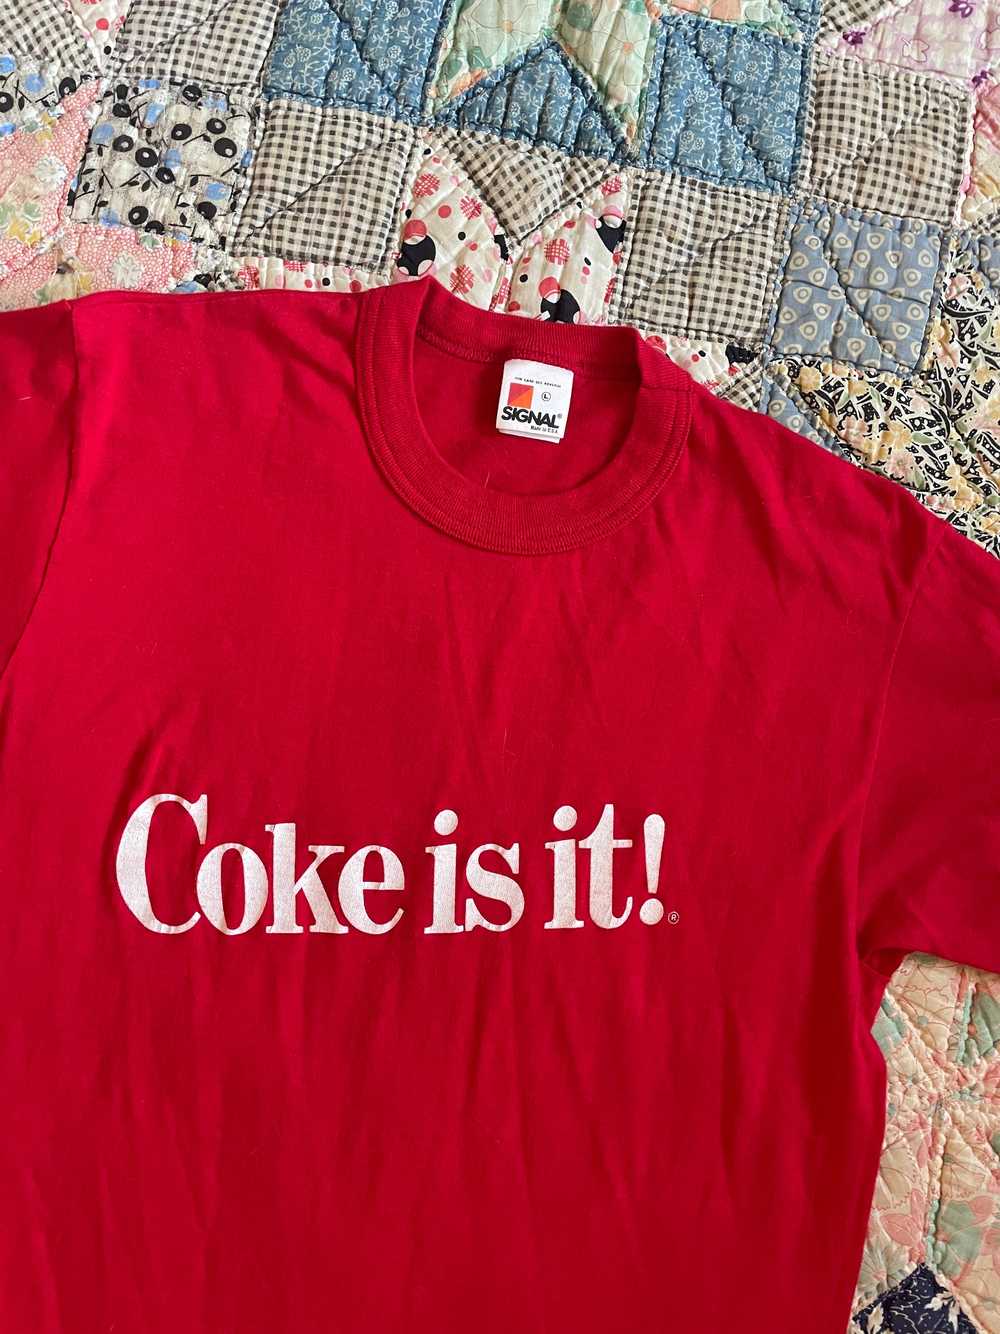 1980s Red Coke Is It! Soda Tee - Size Medium - image 2